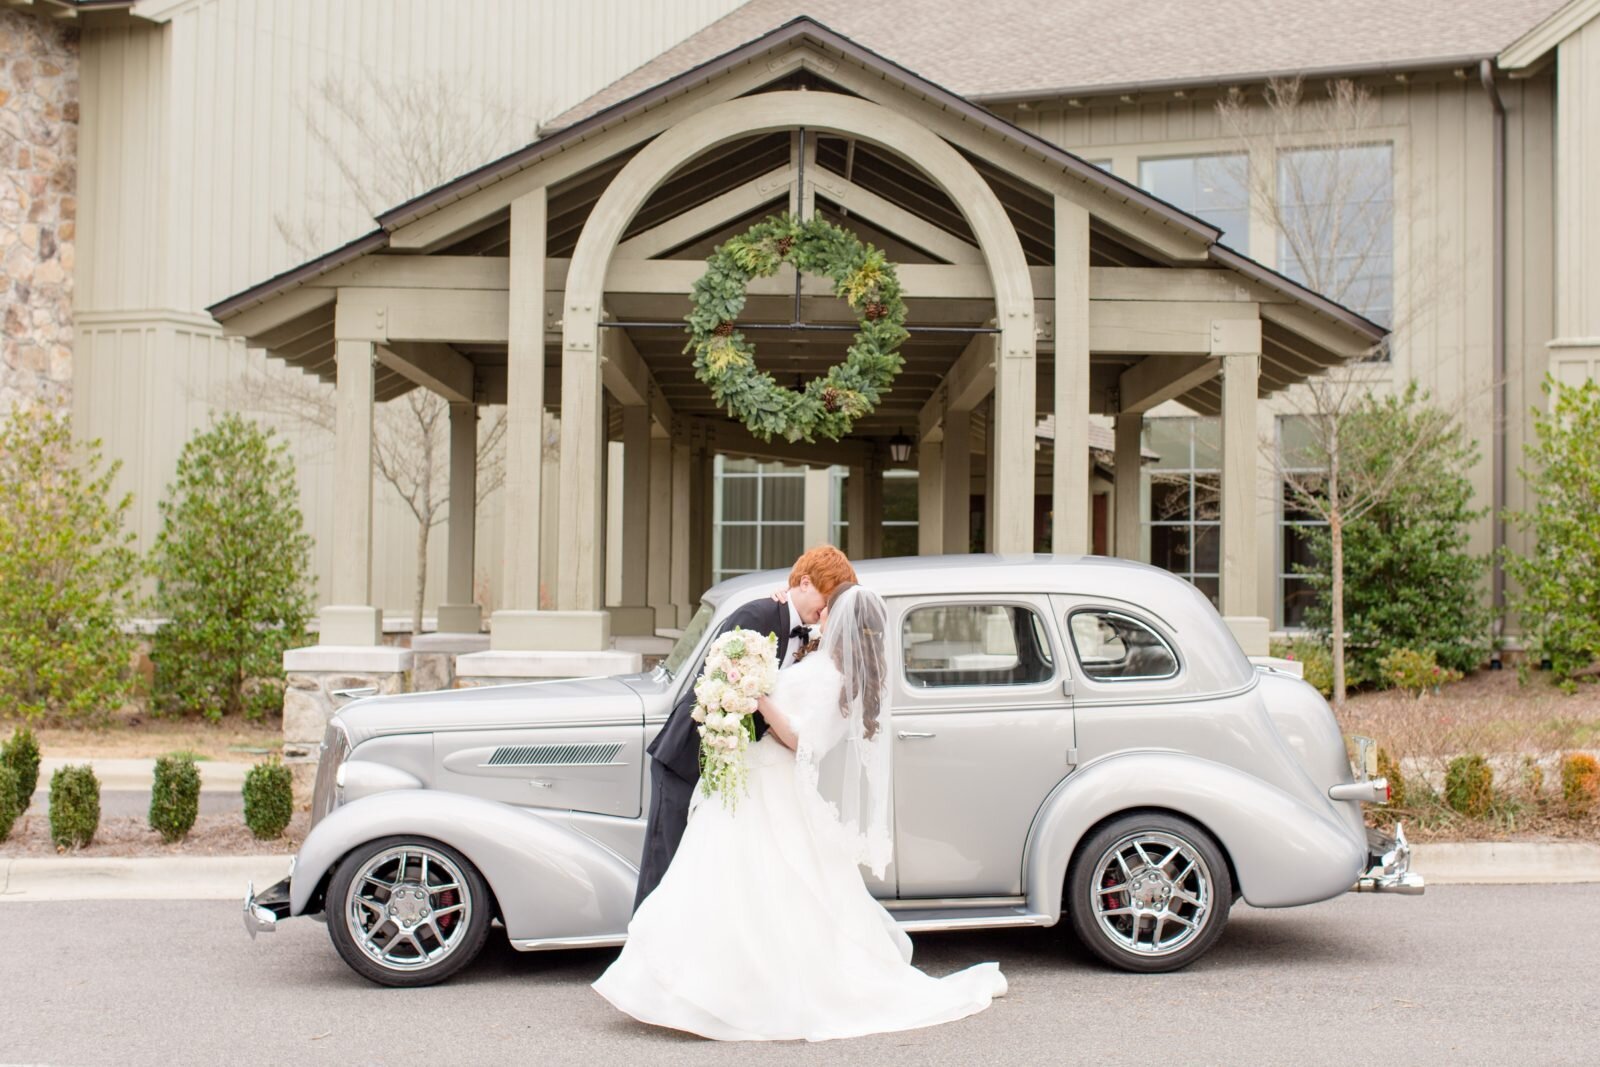 Meet-the-Elams-Birmingham-Alabama-Wedding-Photographers-Katie-And-Alec-41-1600x1067.jpg